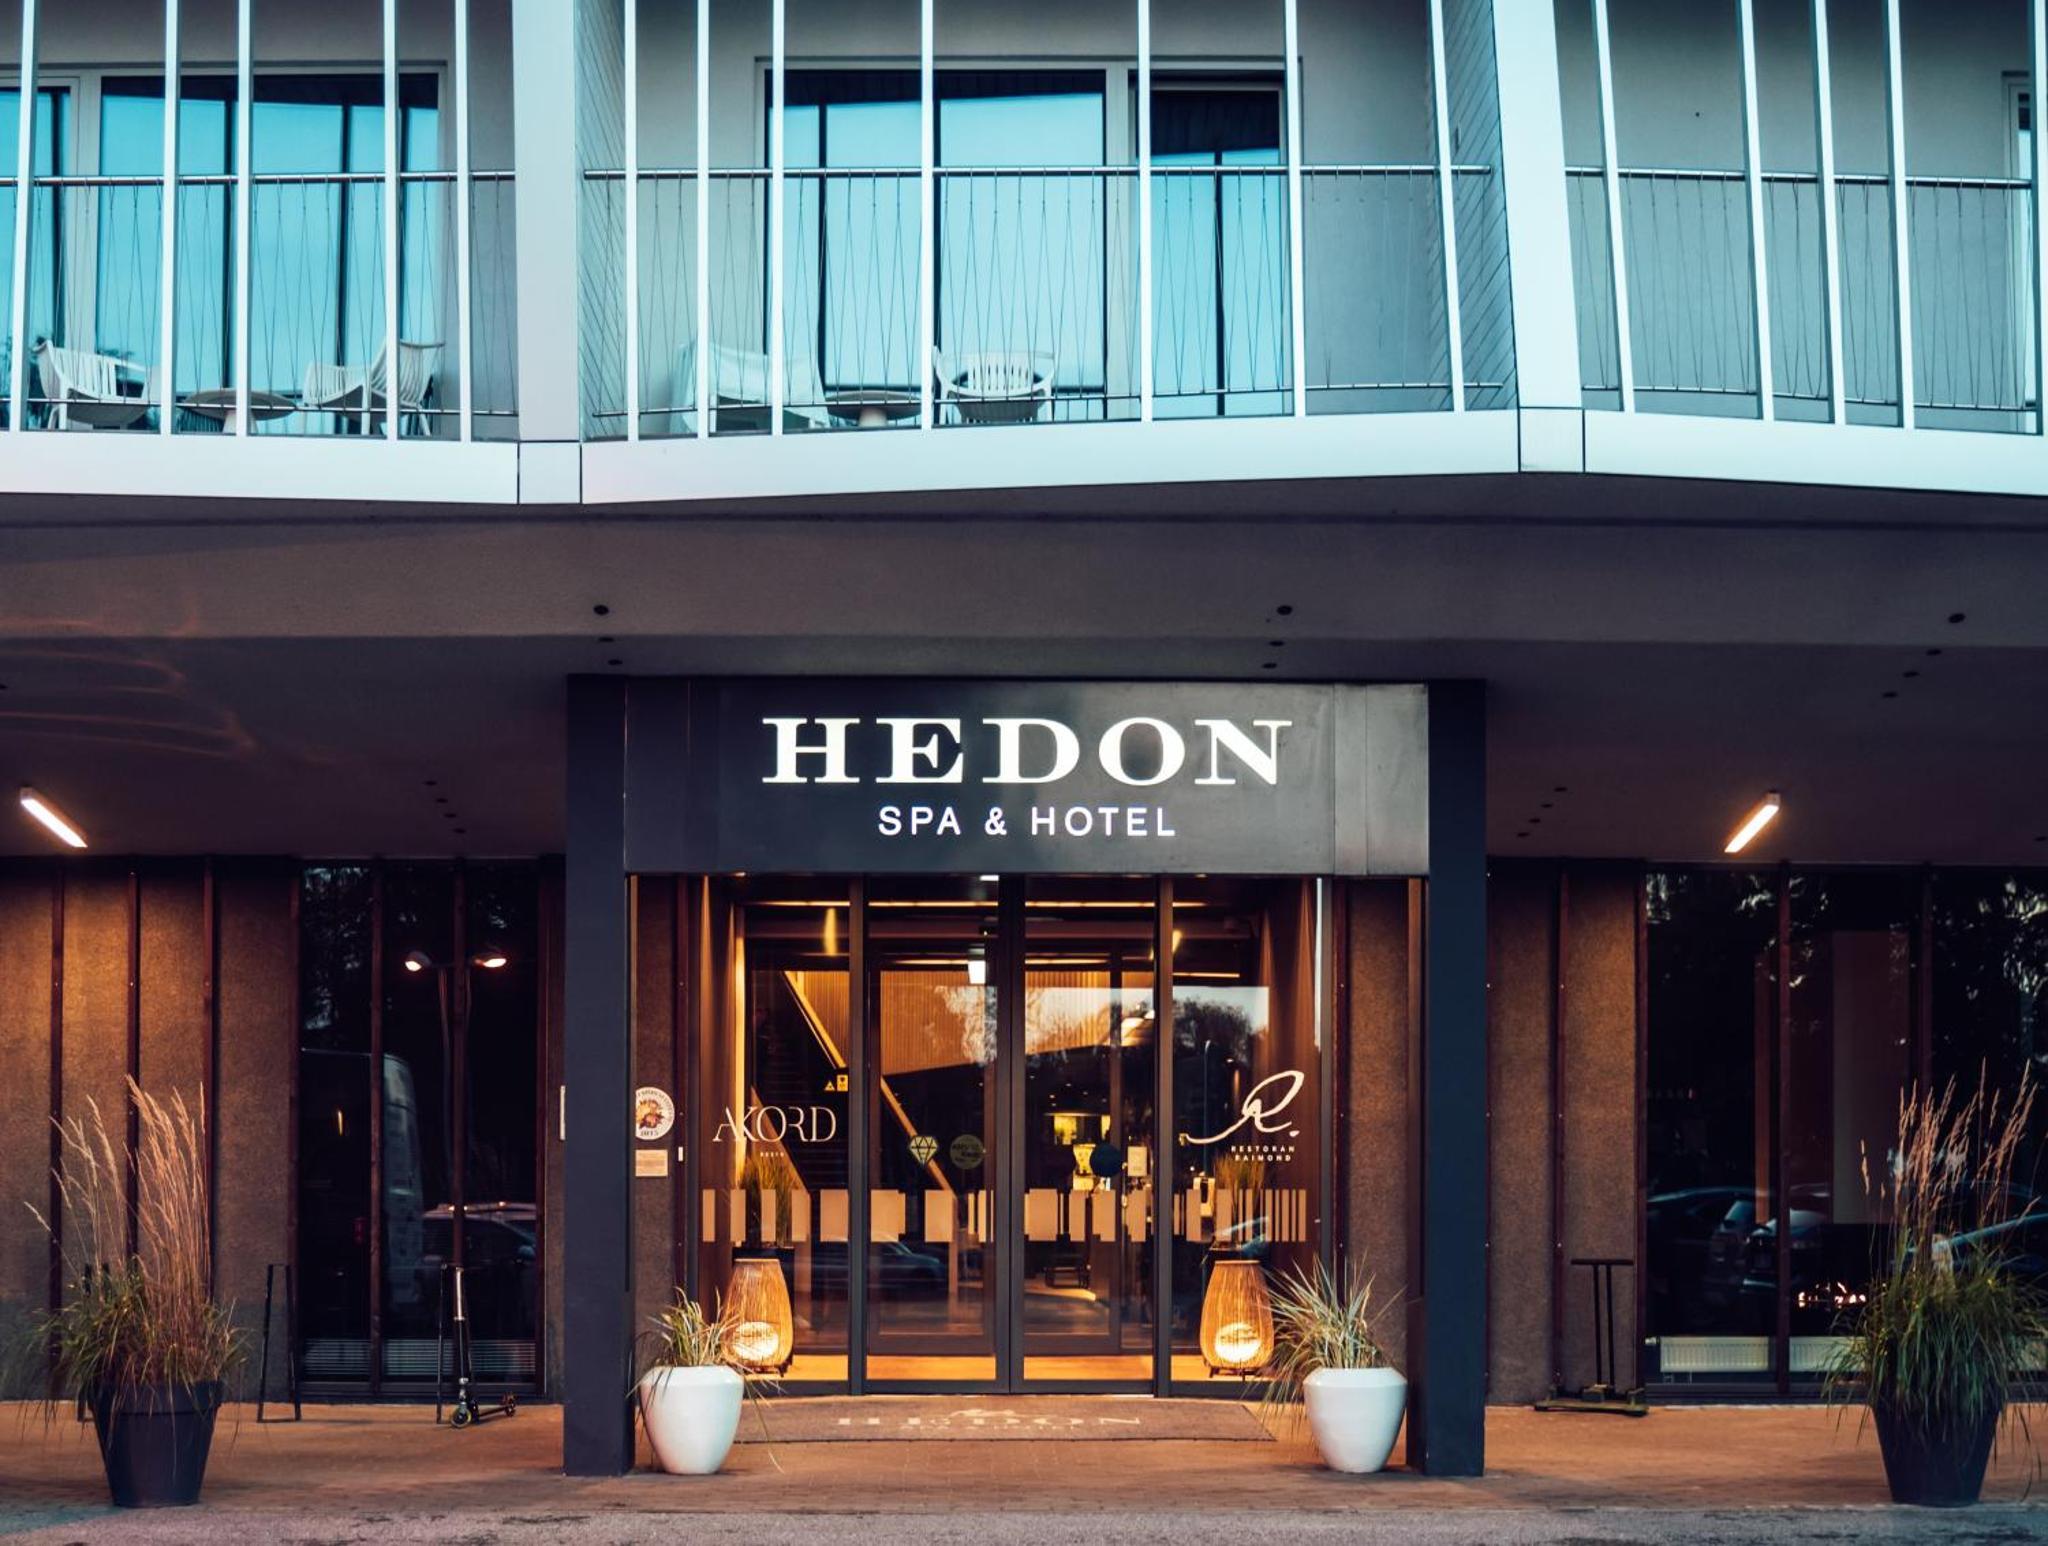 Hedon Spa & Hotel